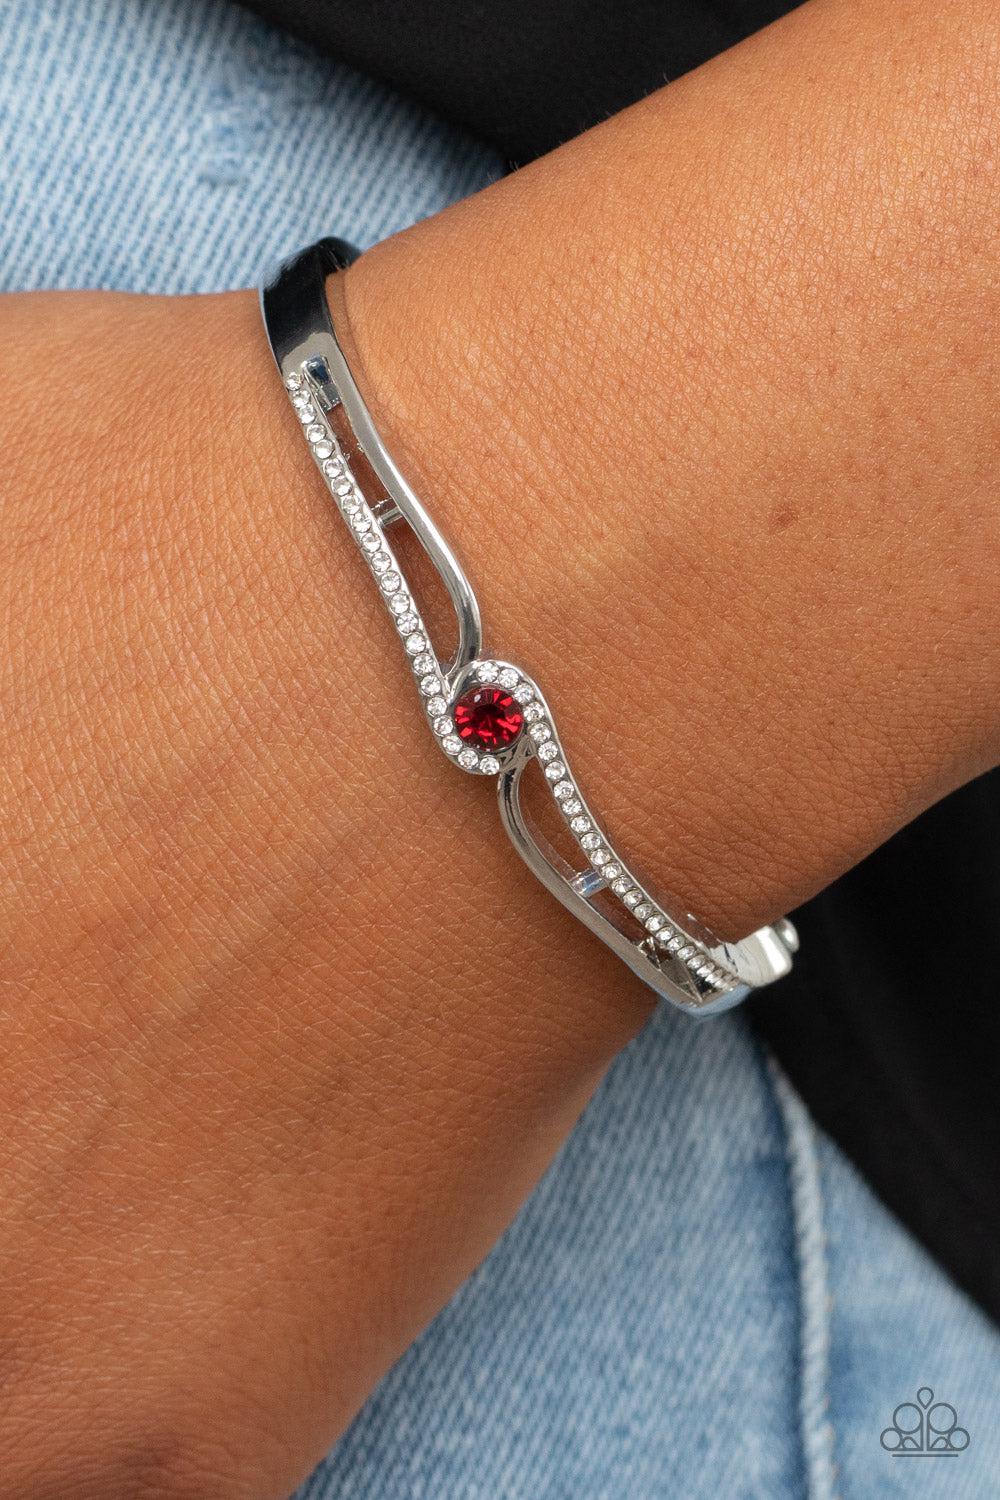 Top-Shelf Shimmer Red Rhinestone Bracelet - Paparazzi Accessories-on model - CarasShop.com - $5 Jewelry by Cara Jewels